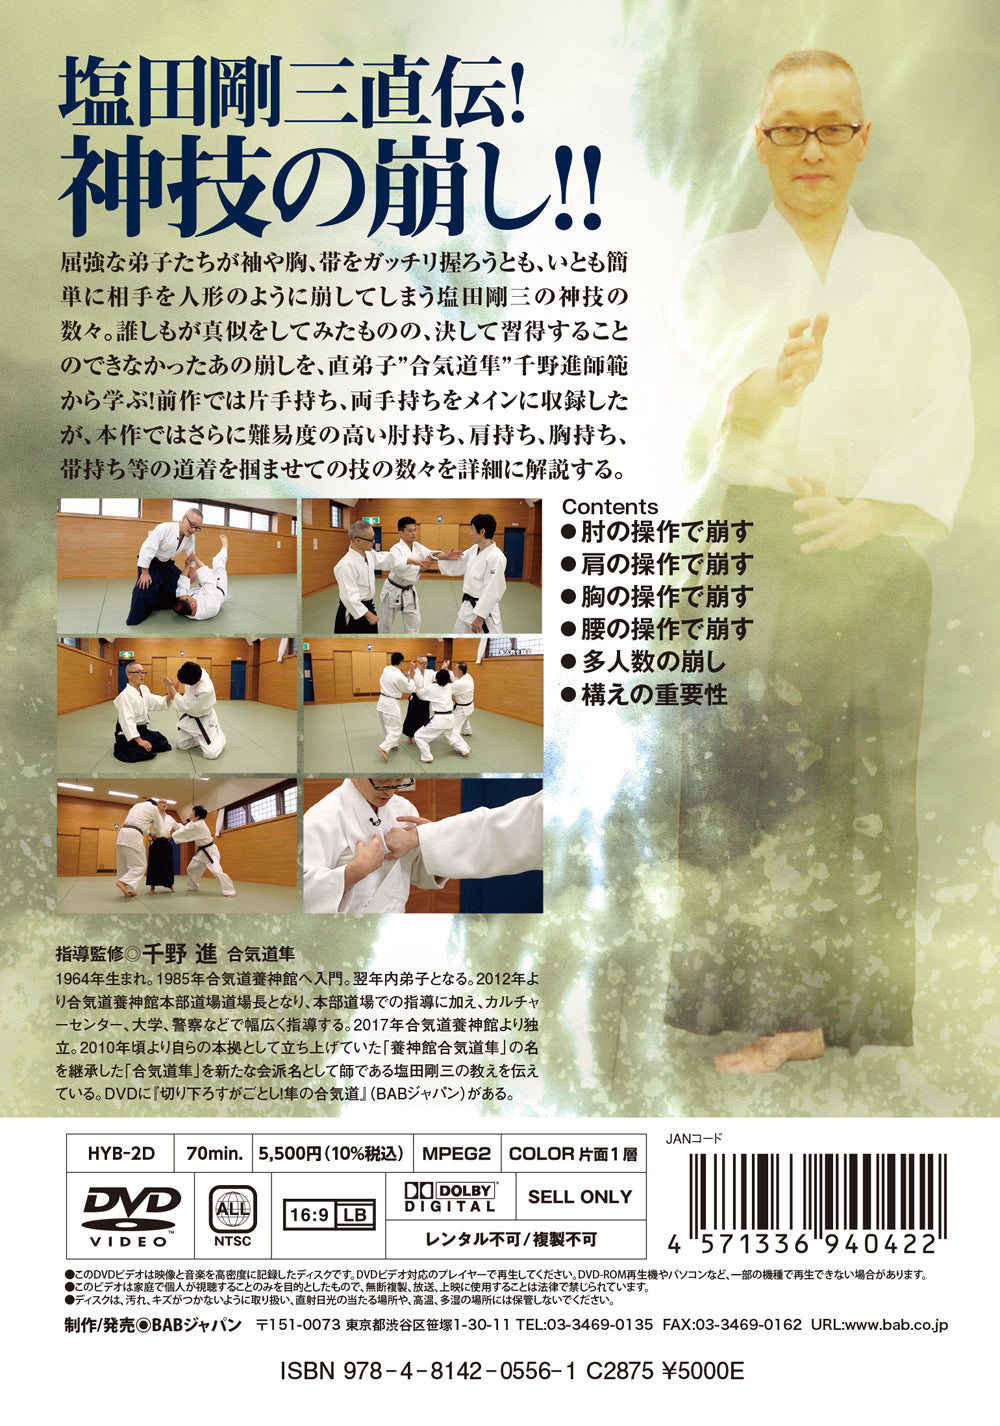 DVD de Aikido Vol 2 de Gozo Shioda de Susumu Chino